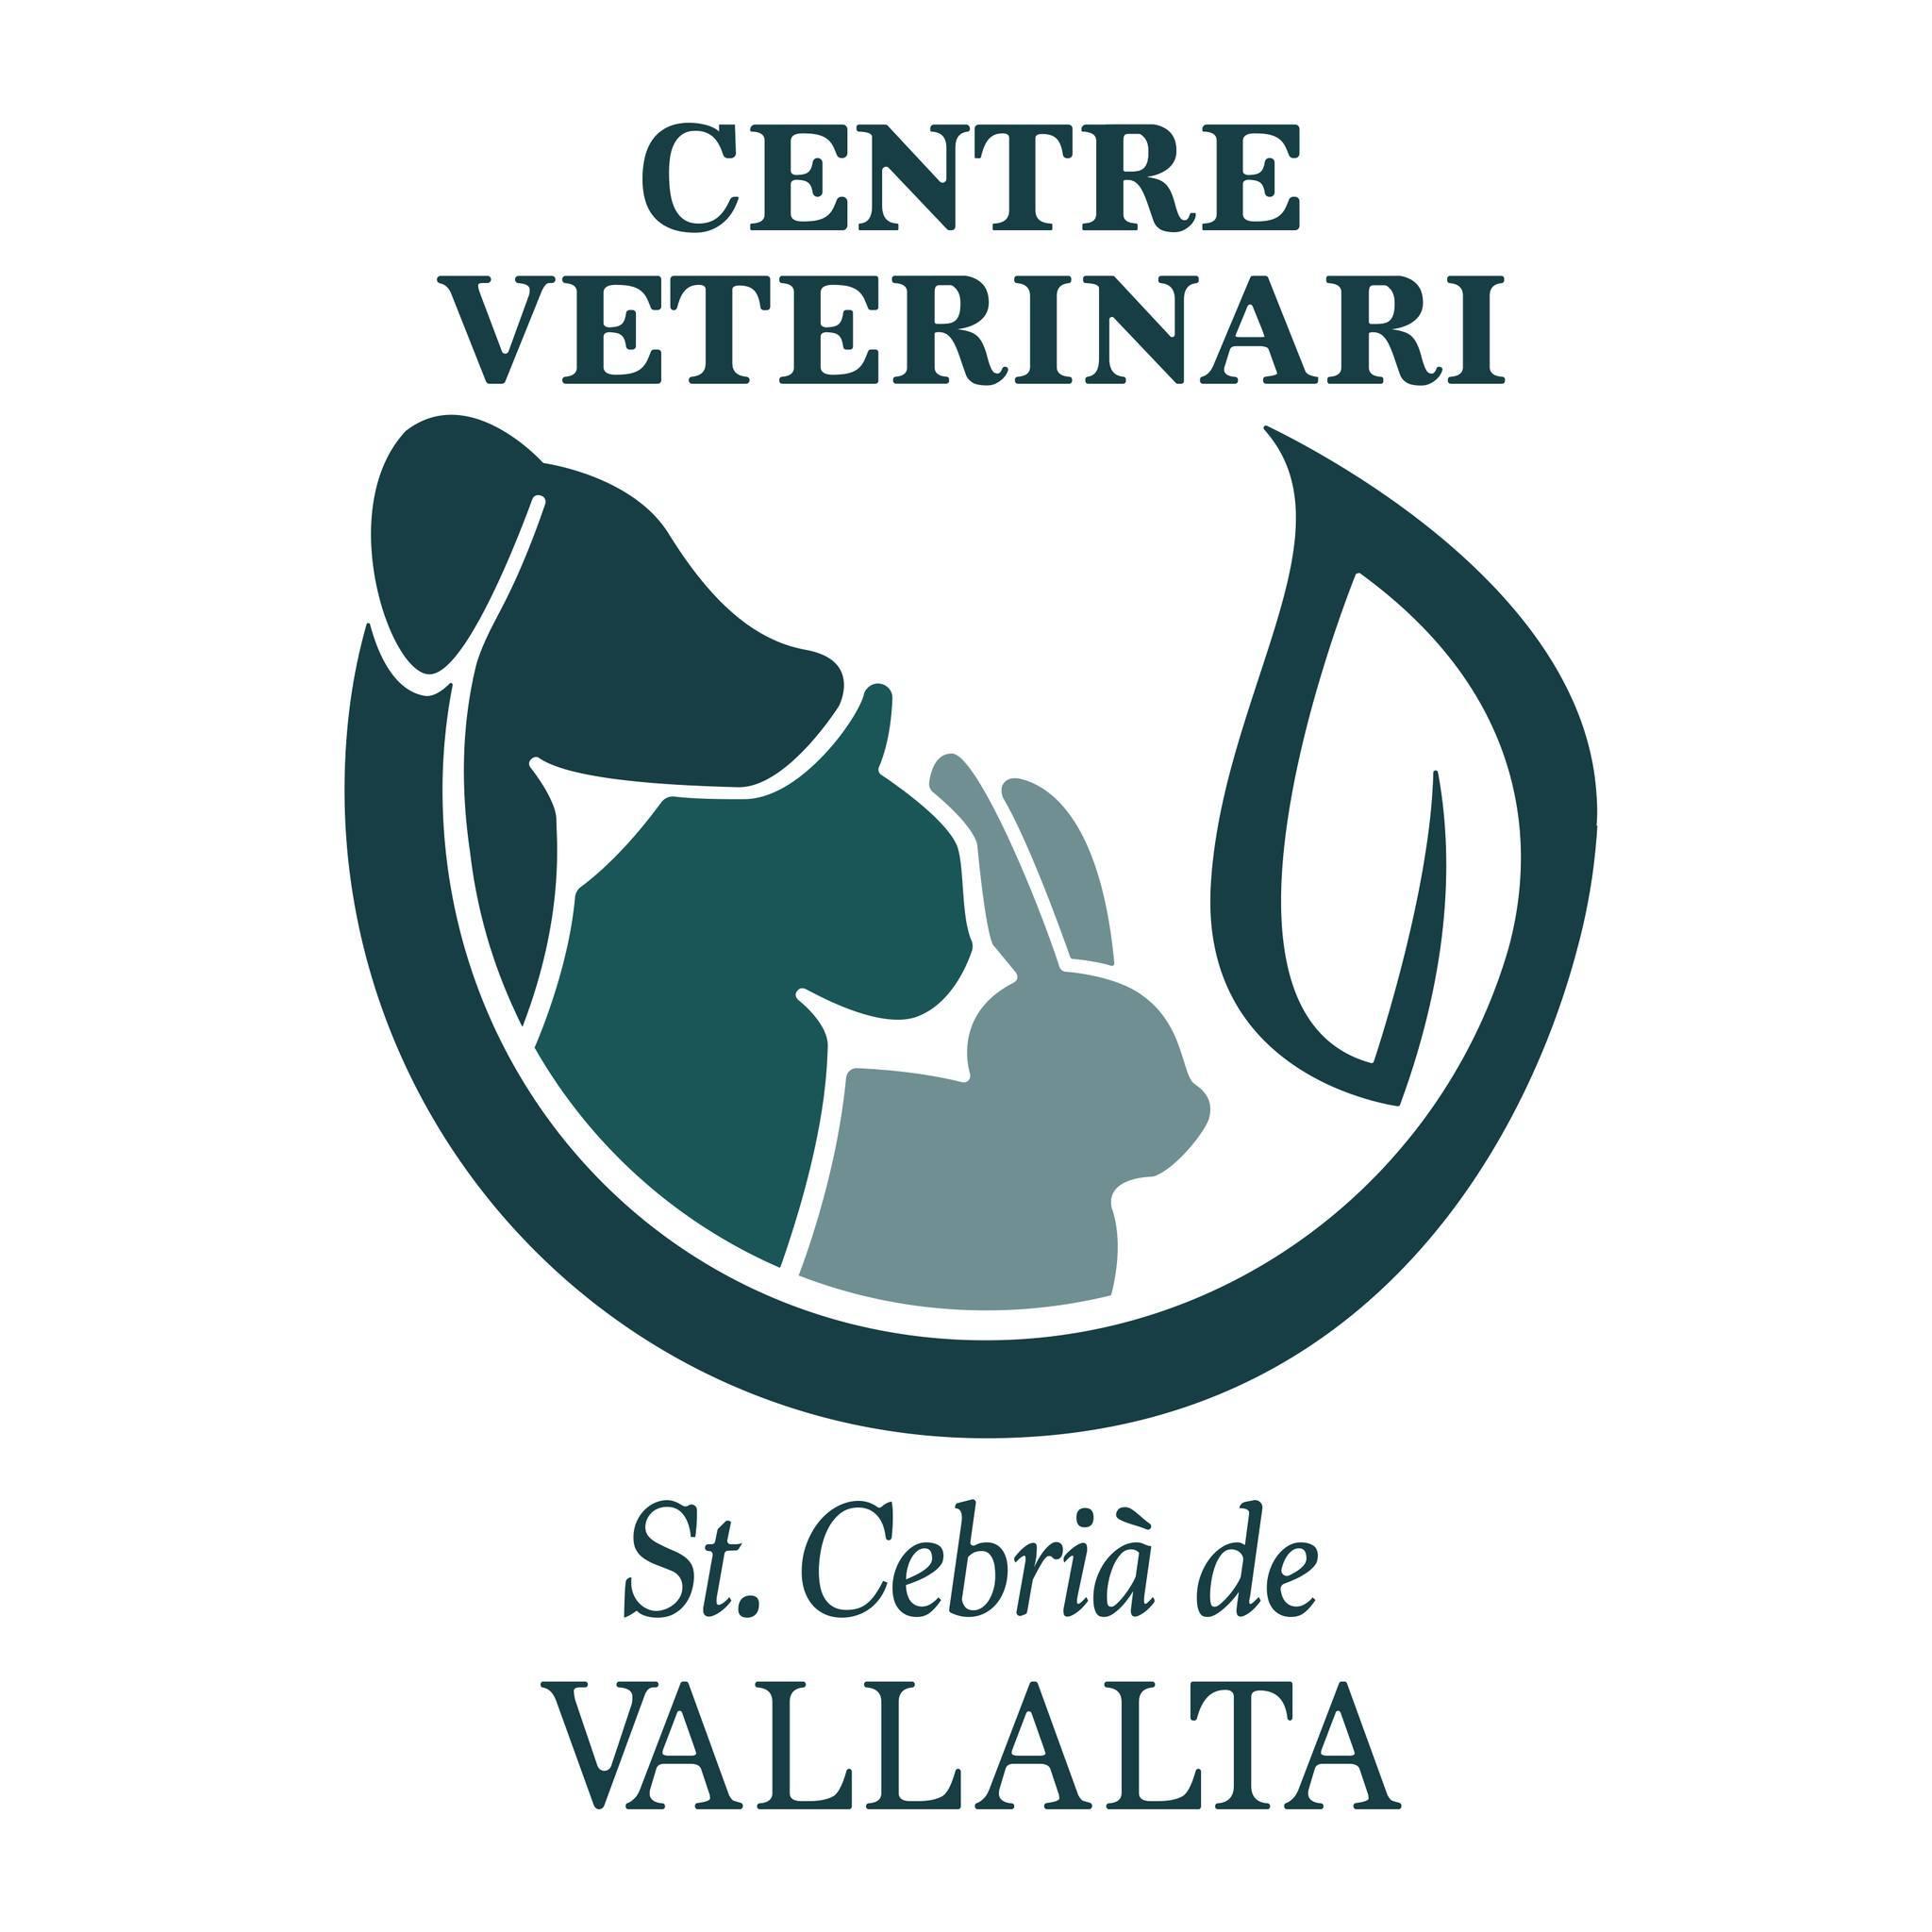 Centre Veterinari St. Cebrià de Vallalta Sant Cebrià de Vallalta